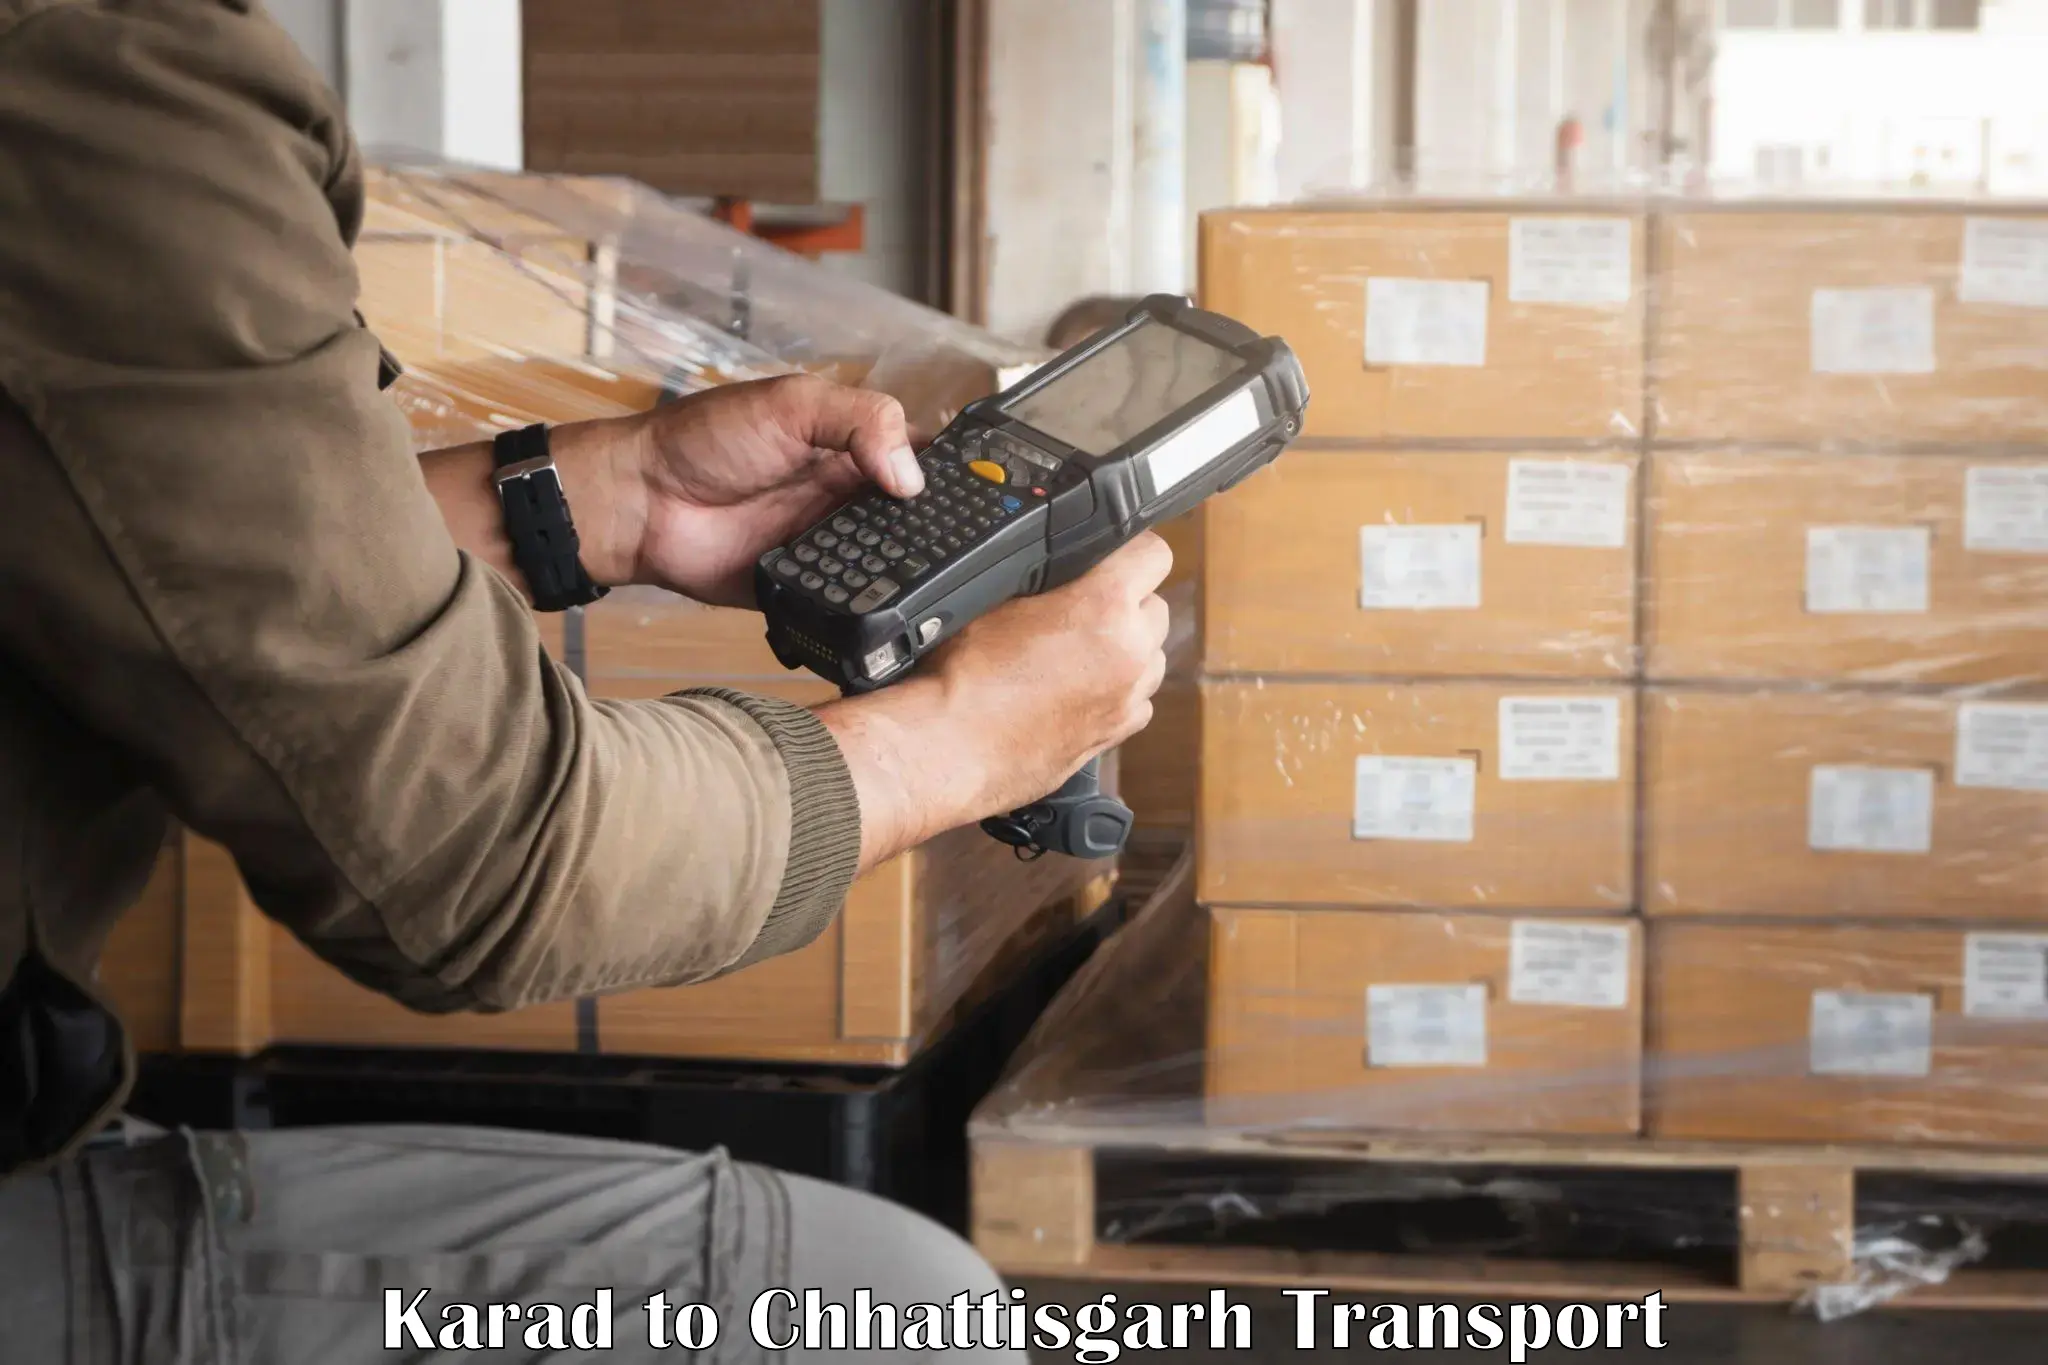 Goods delivery service Karad to Bastar